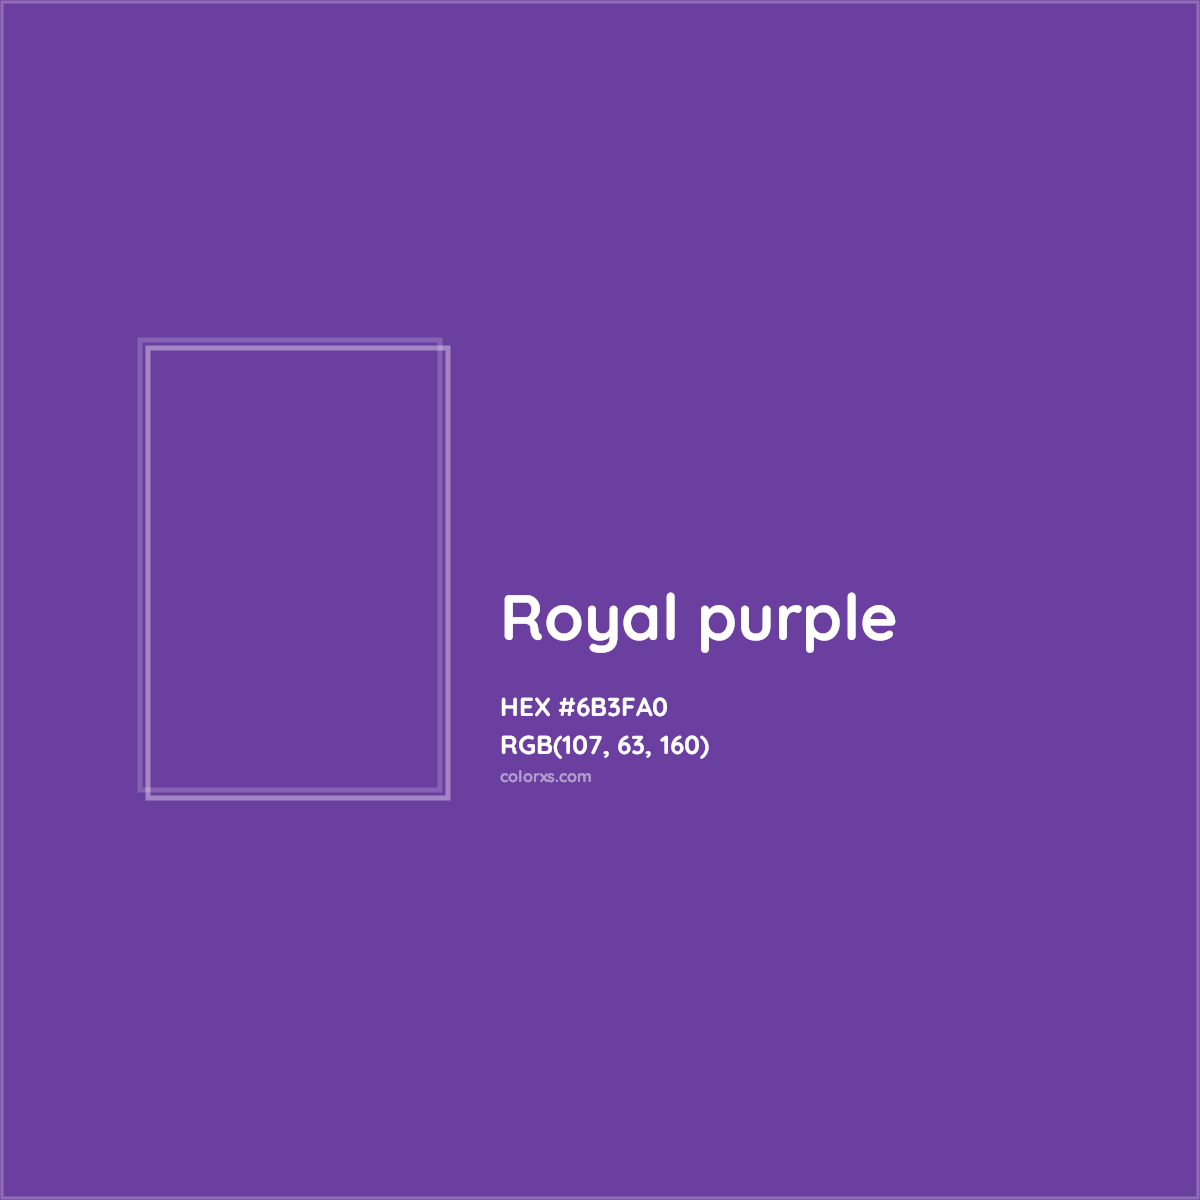 About Neon Violet - Color codes, similar colors and paints 